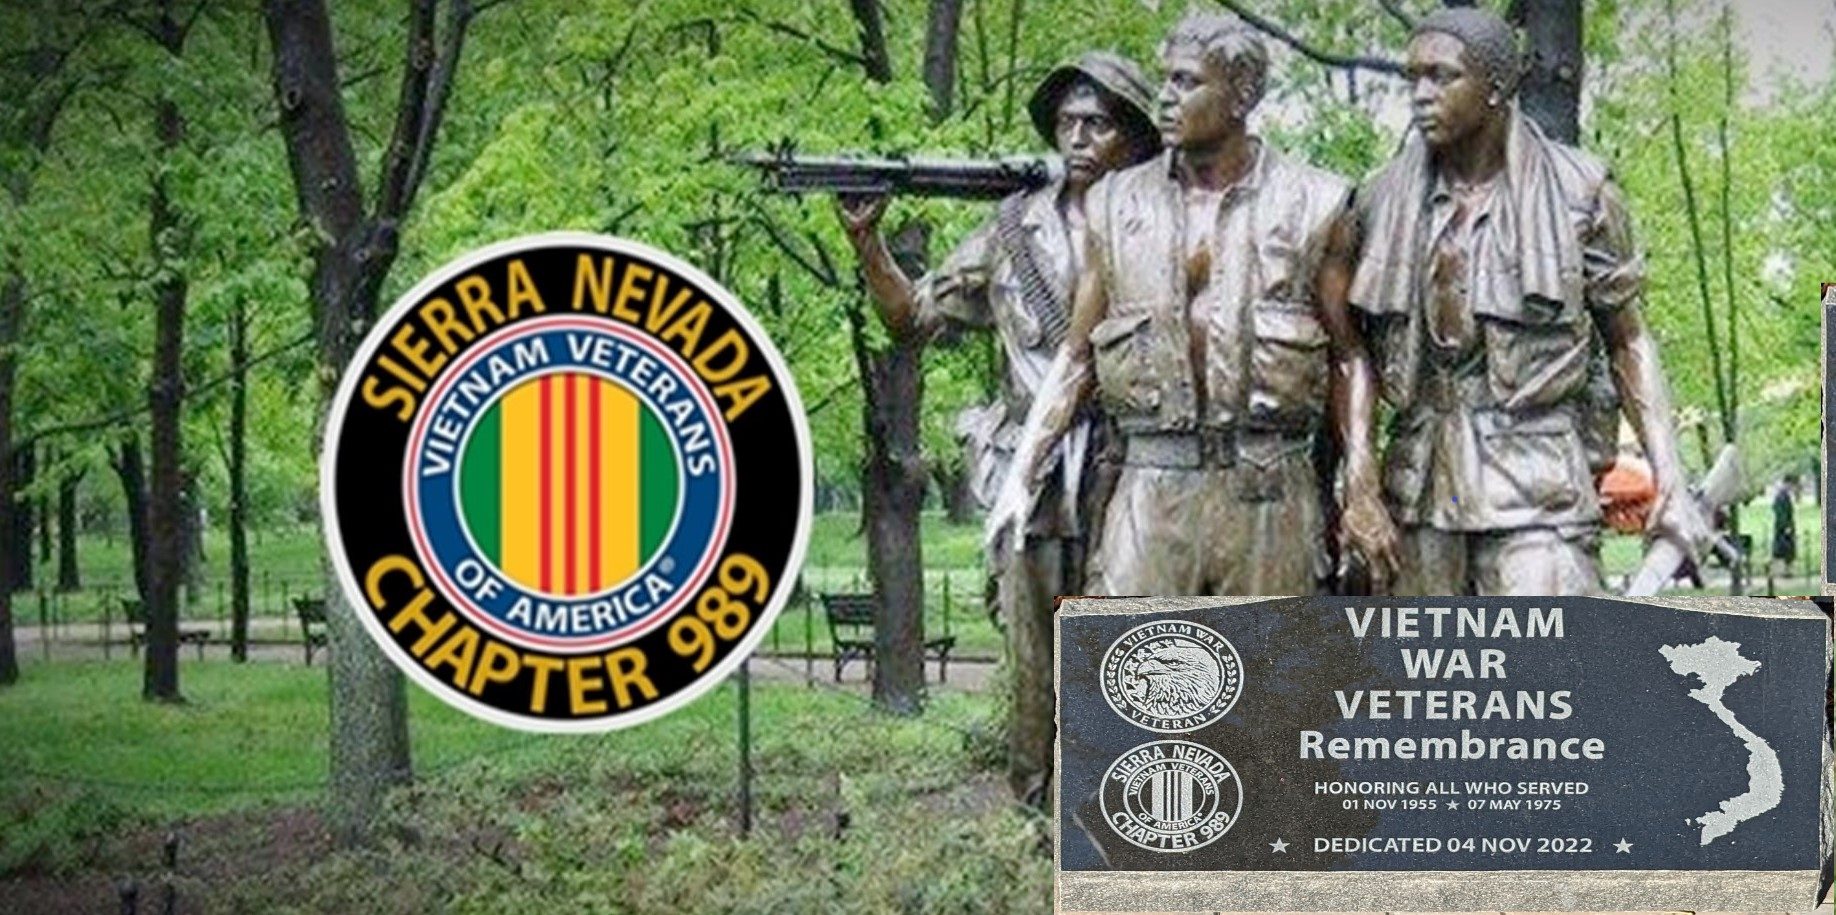   Vietnam Veterans of America Sierra Nevada  Chapter  989   Reno, Nevada